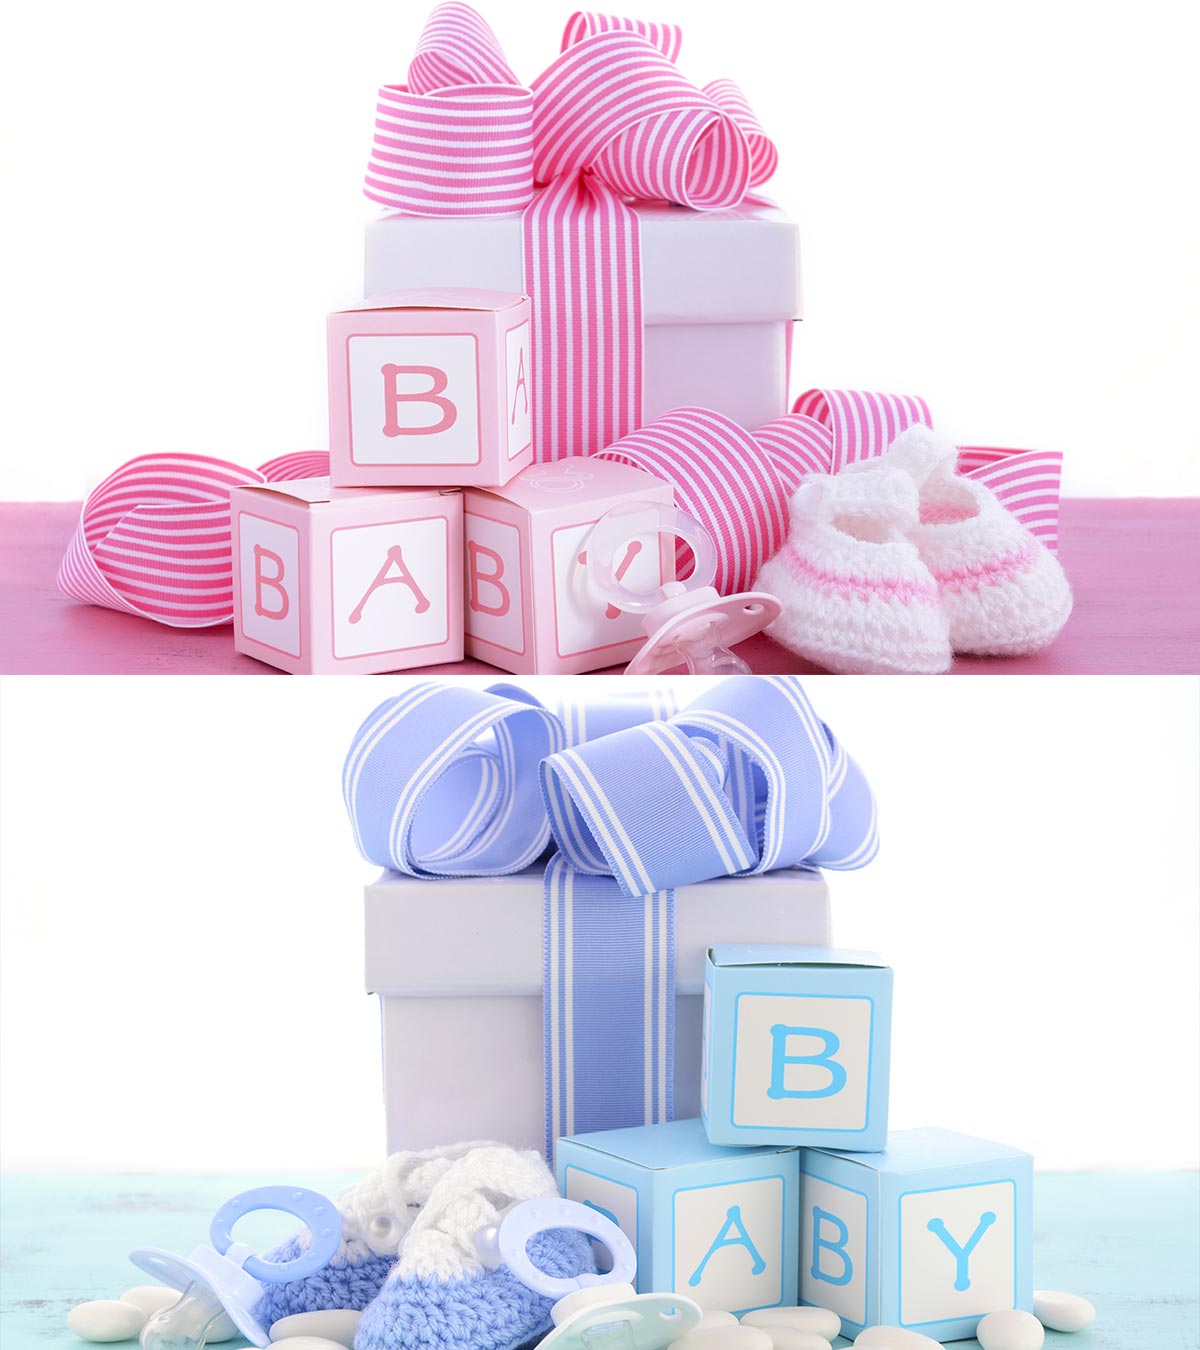 newborn baby products